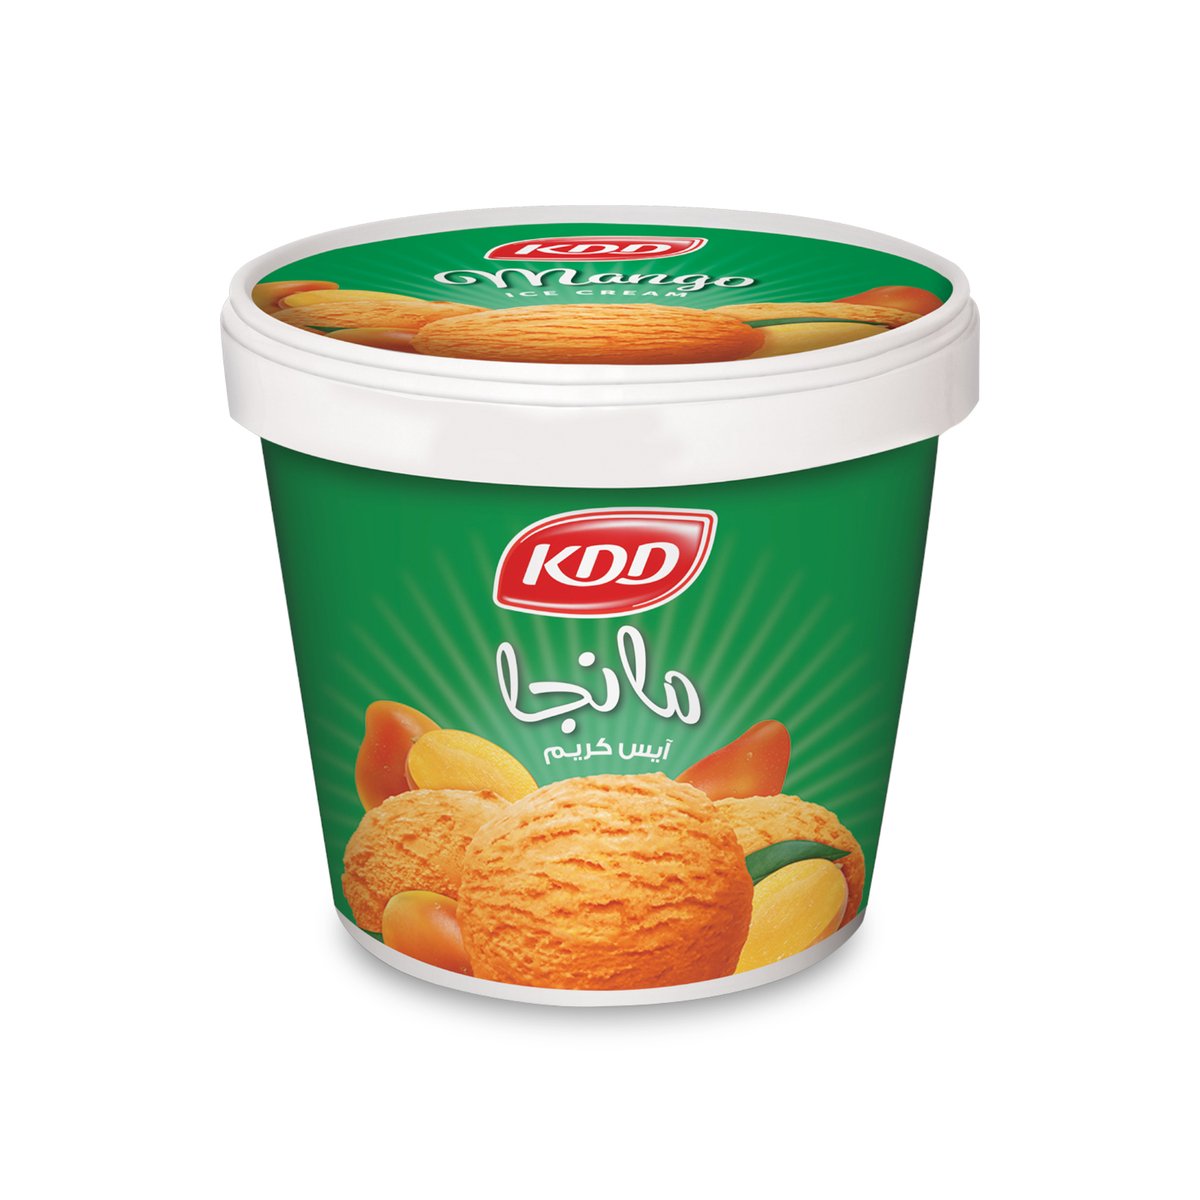 KDD Mango Ice Cream 500ml